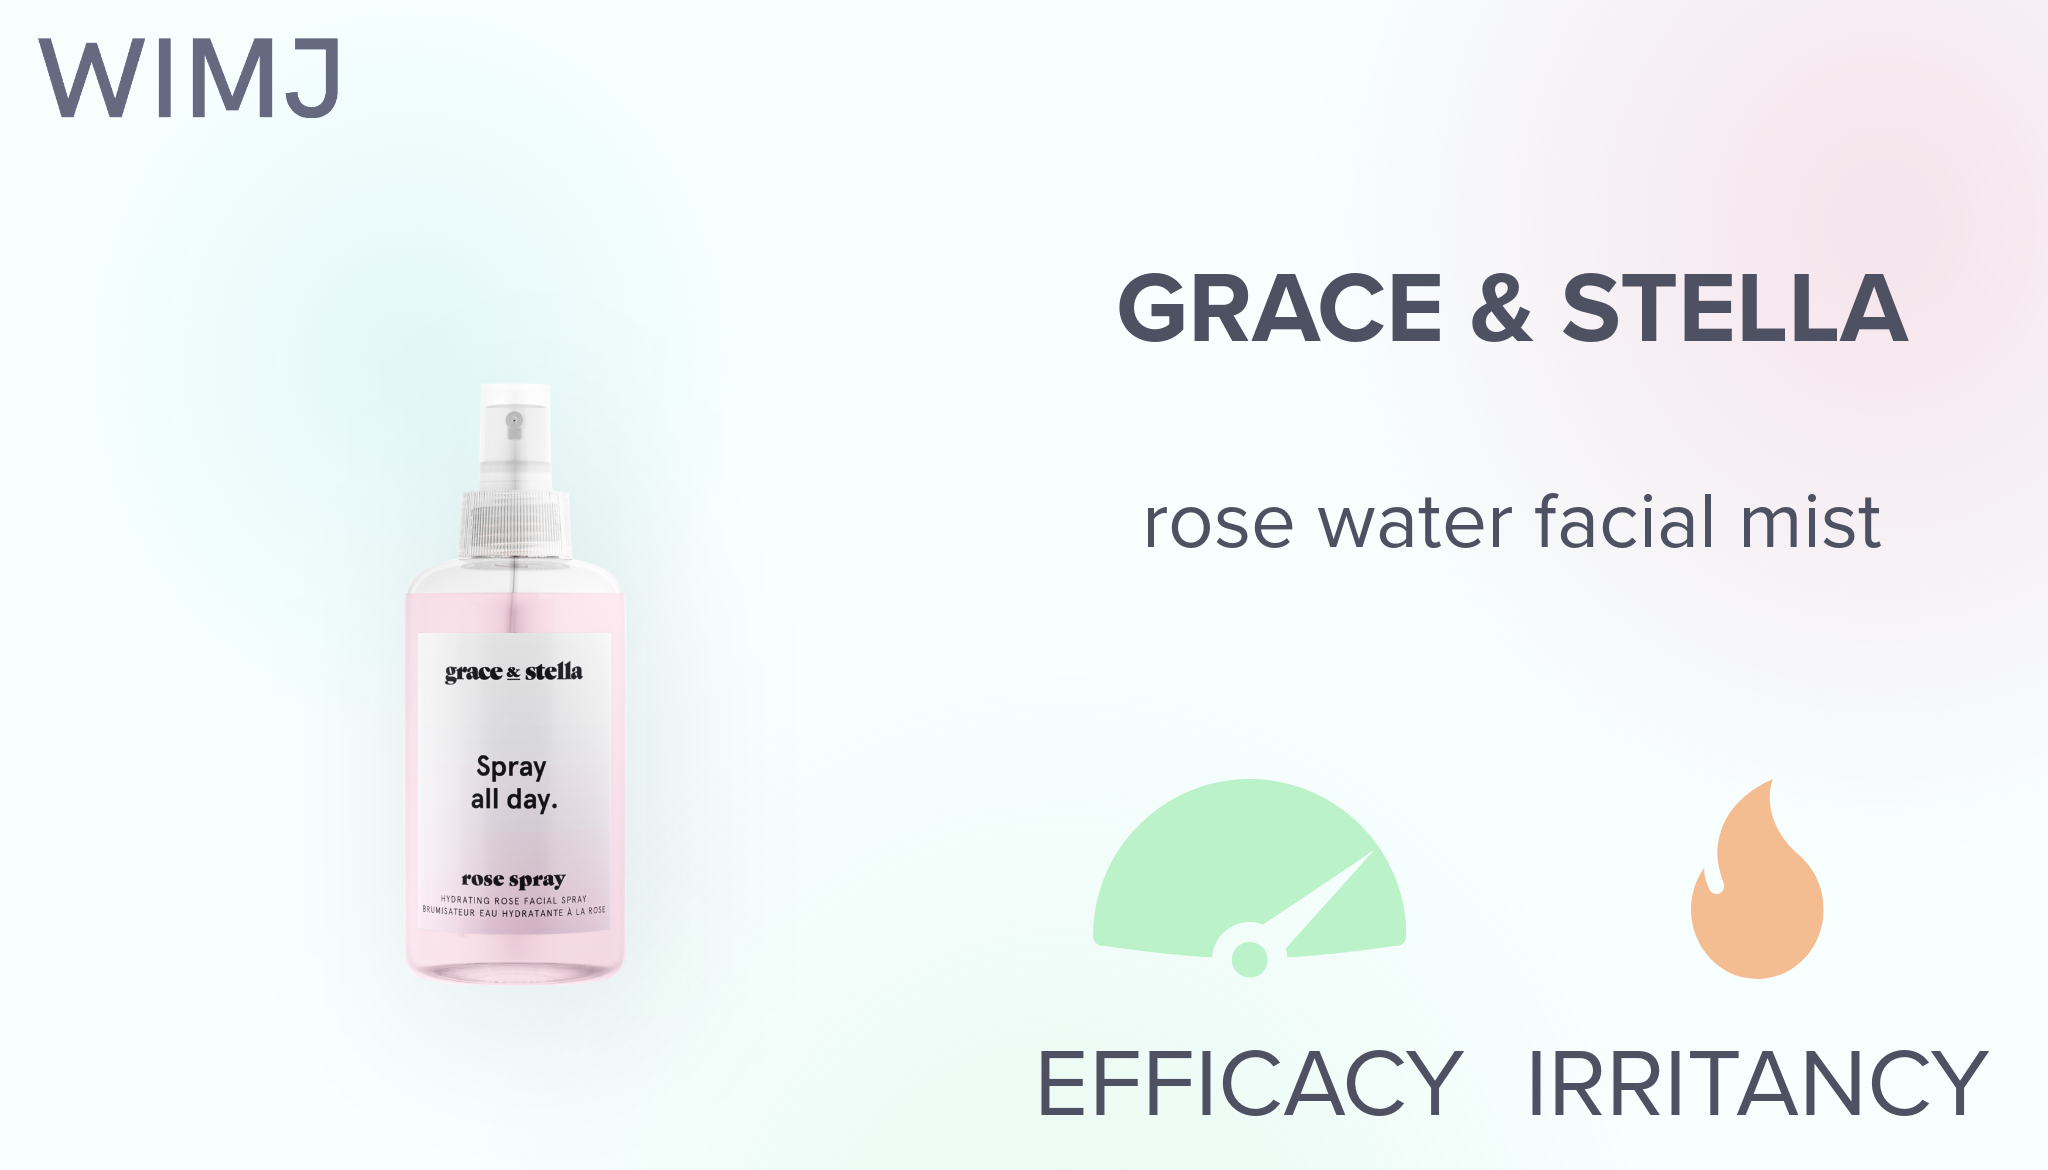 Review: grace & stella - rose water facial mist - WIMJ